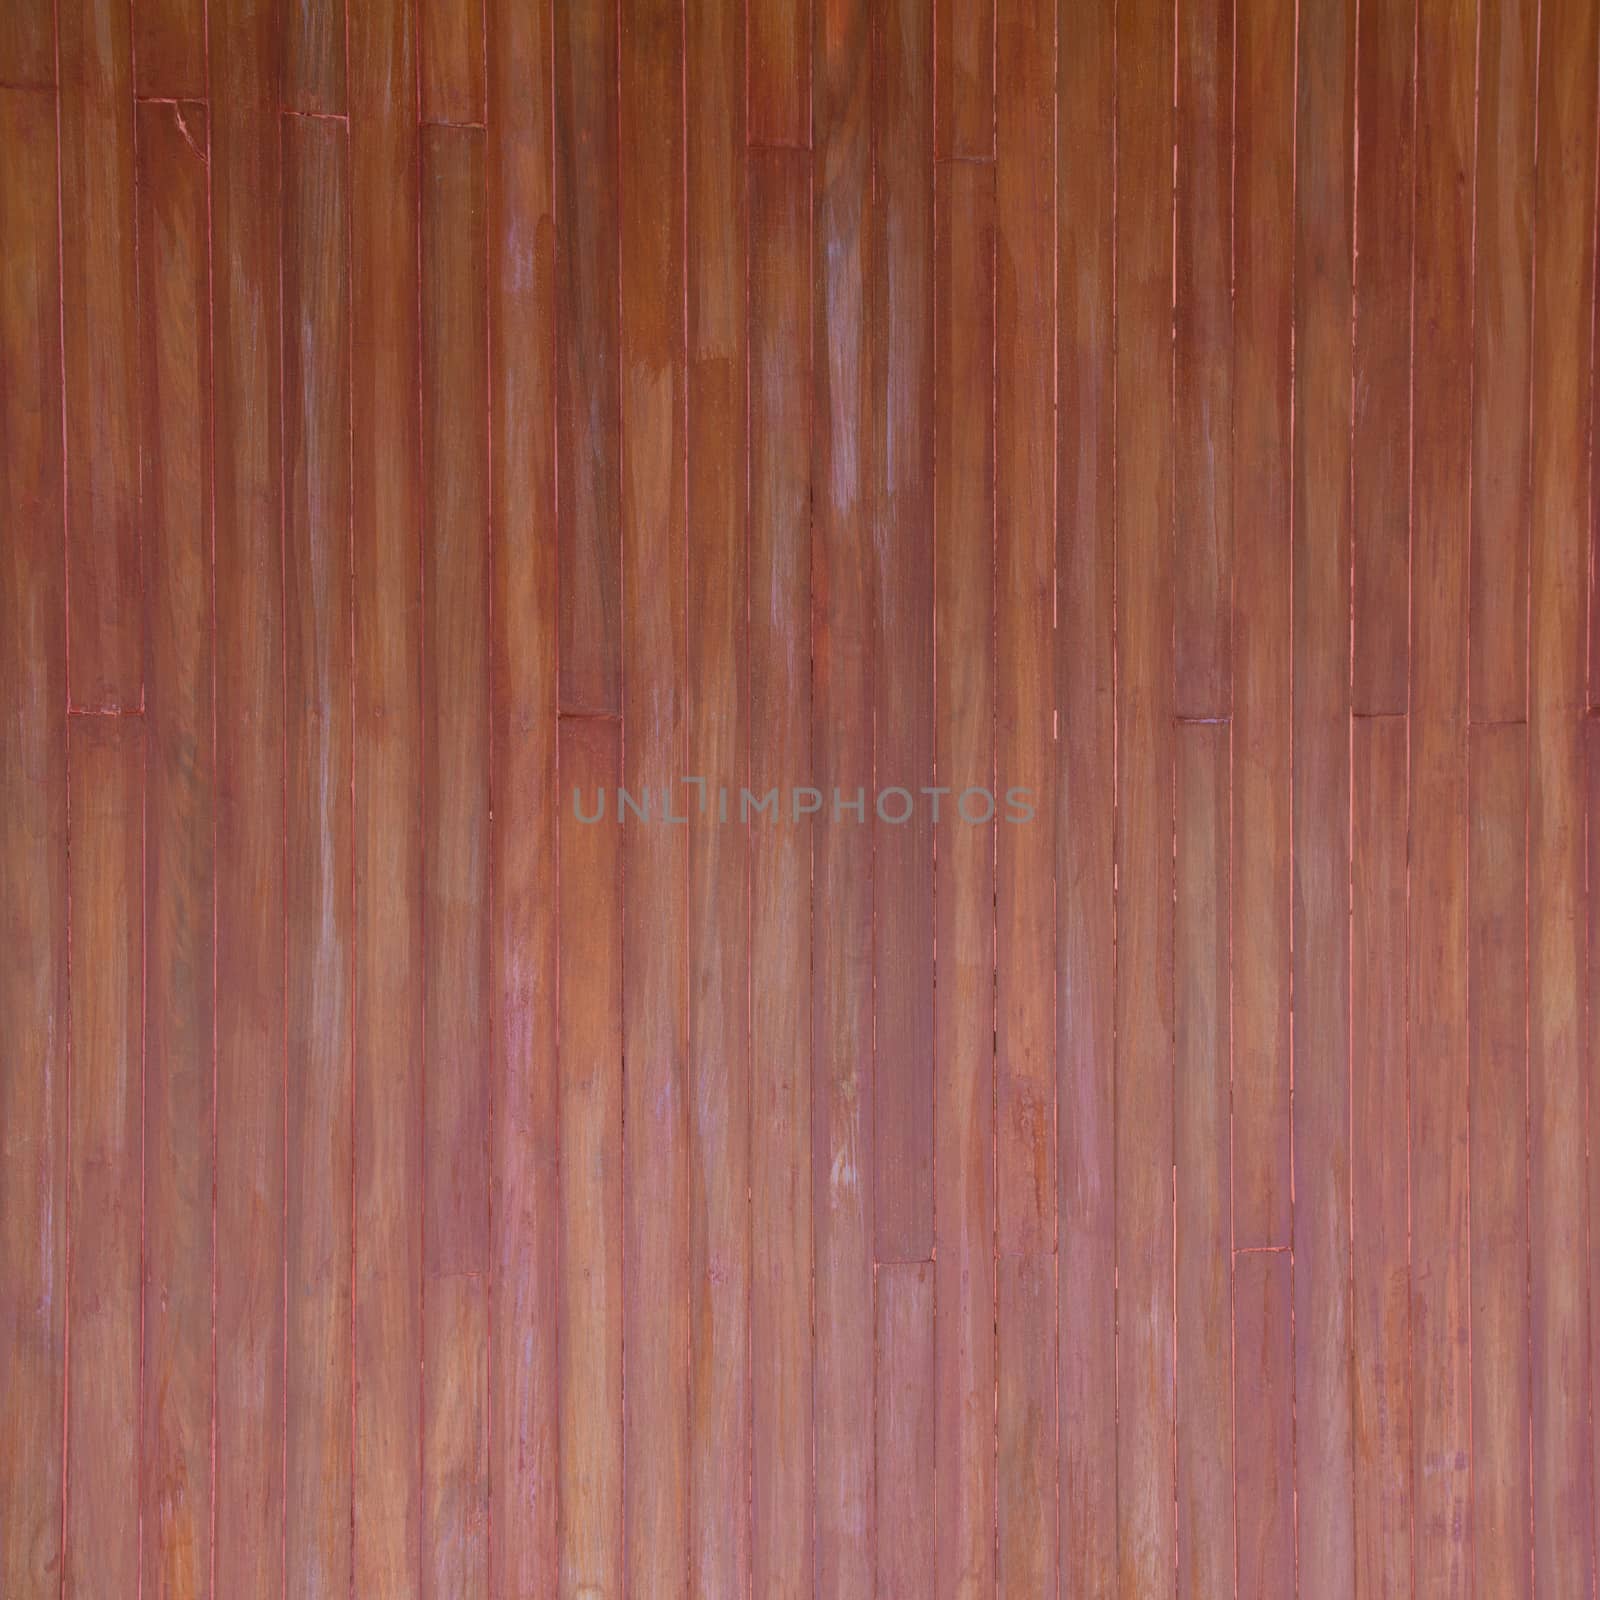 Grunge Wood panels for background 